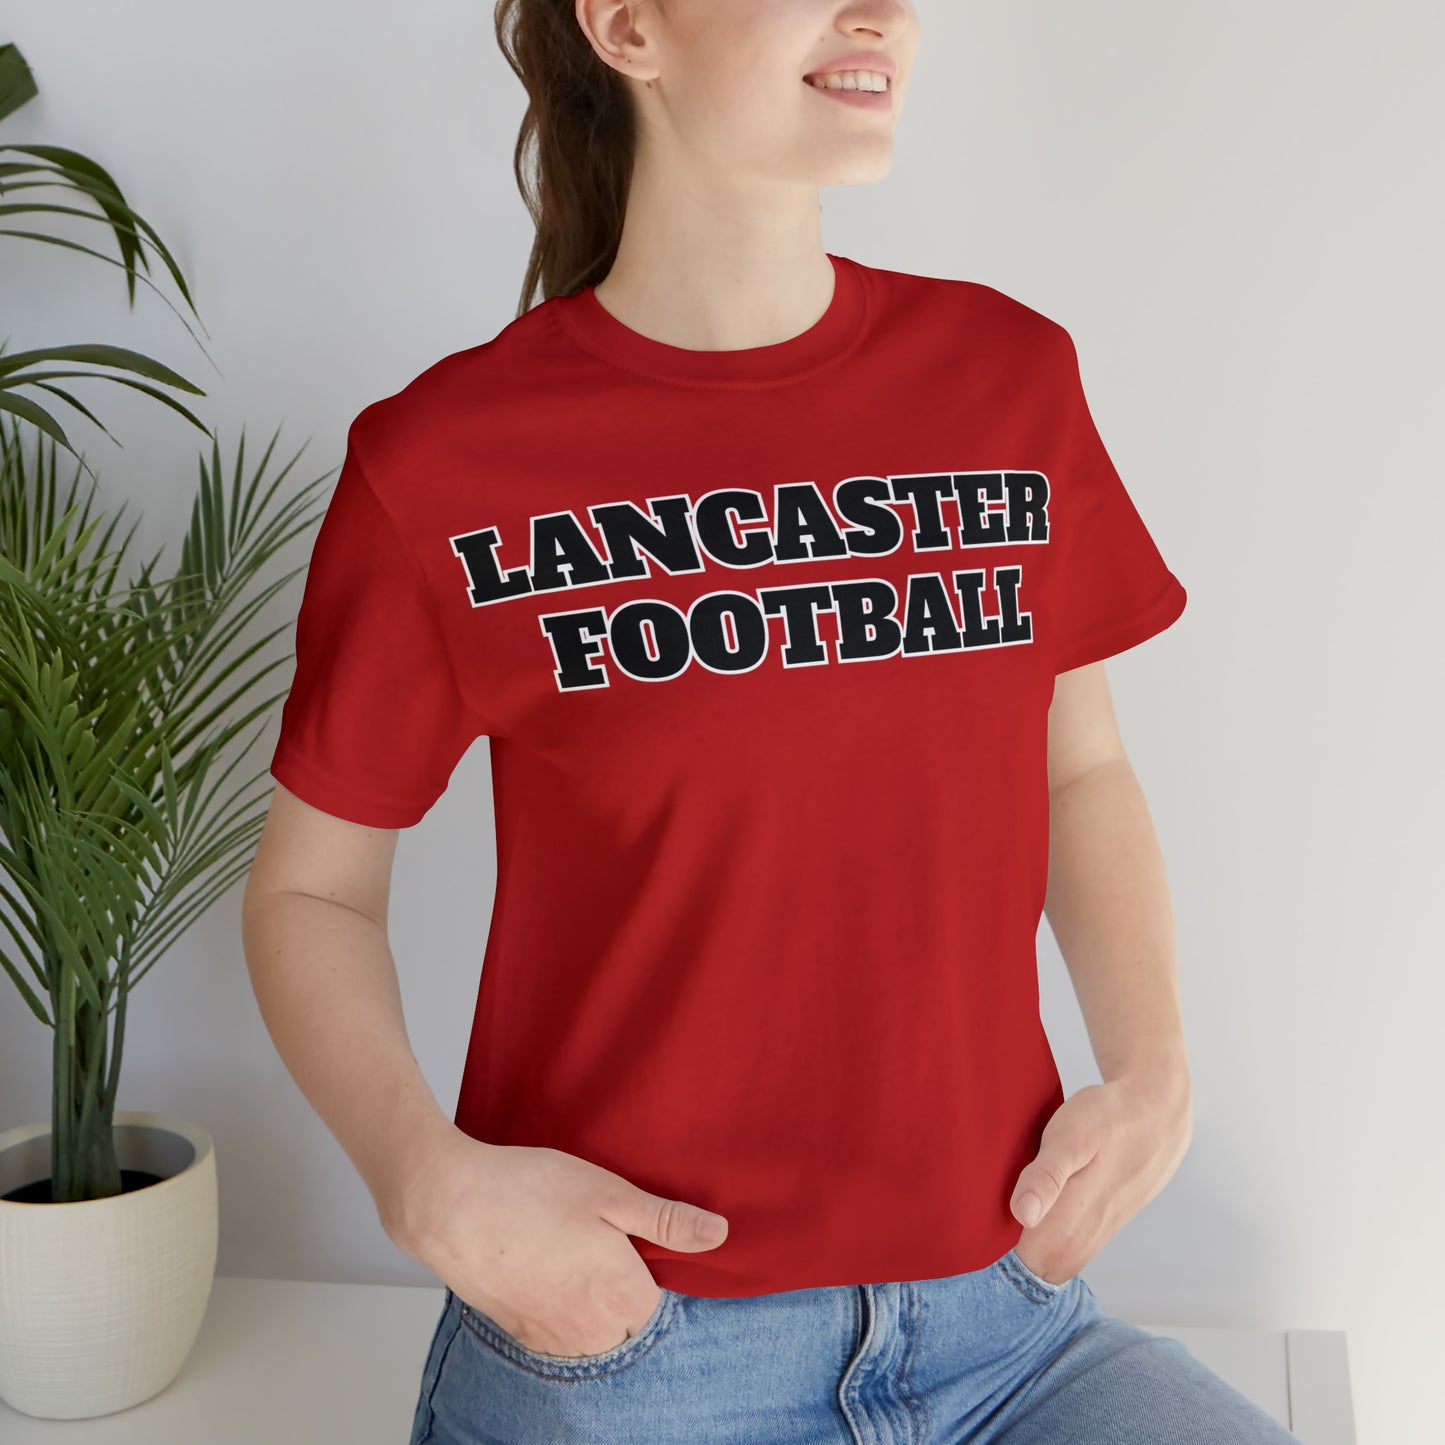 Lancaster Unisex Jersey Short Sleeve Tee